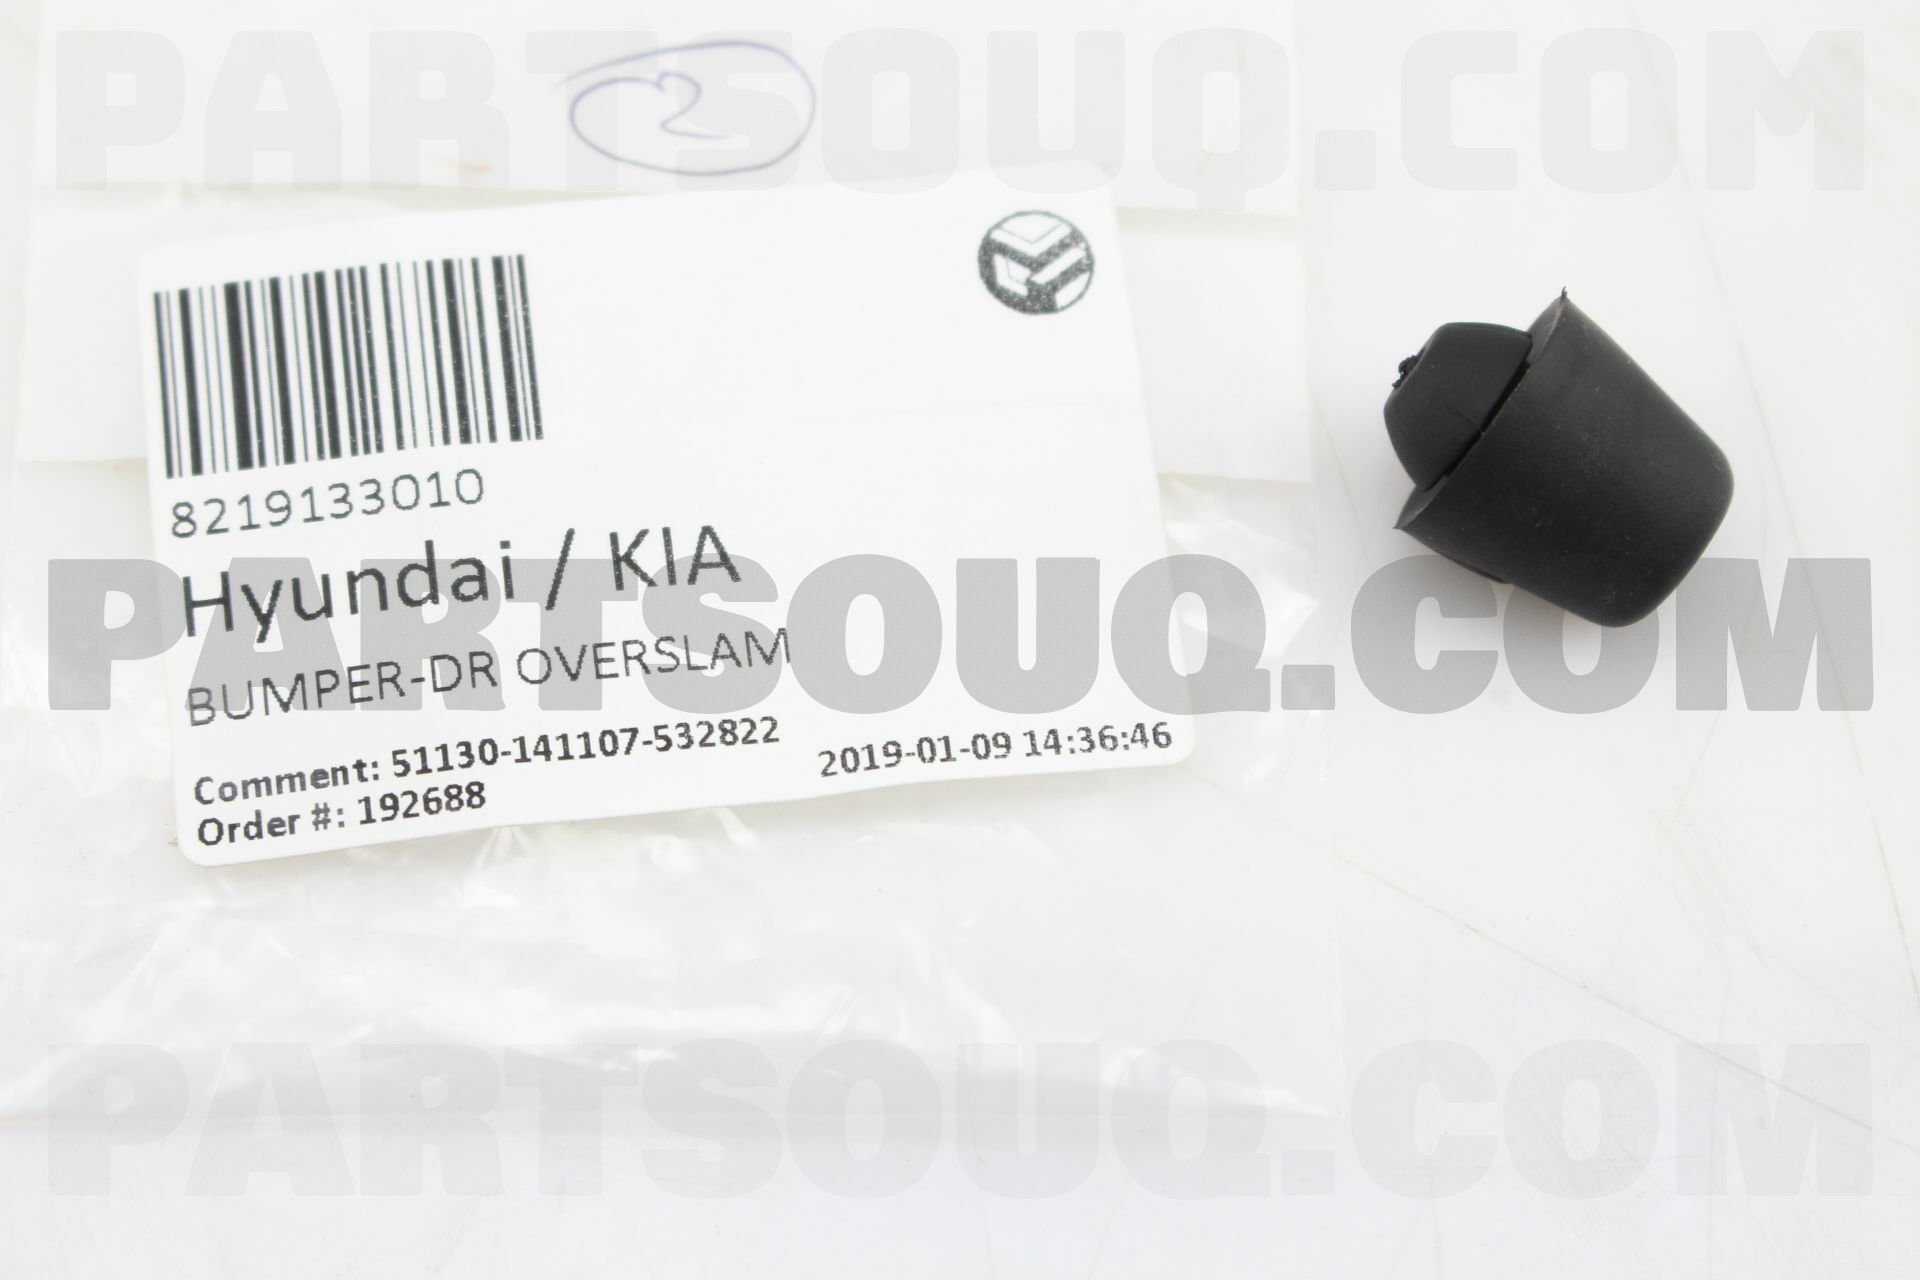 BUMPER-DR OVERSLAM 8219133010 | Hyundai / KIA Parts | PartSouq